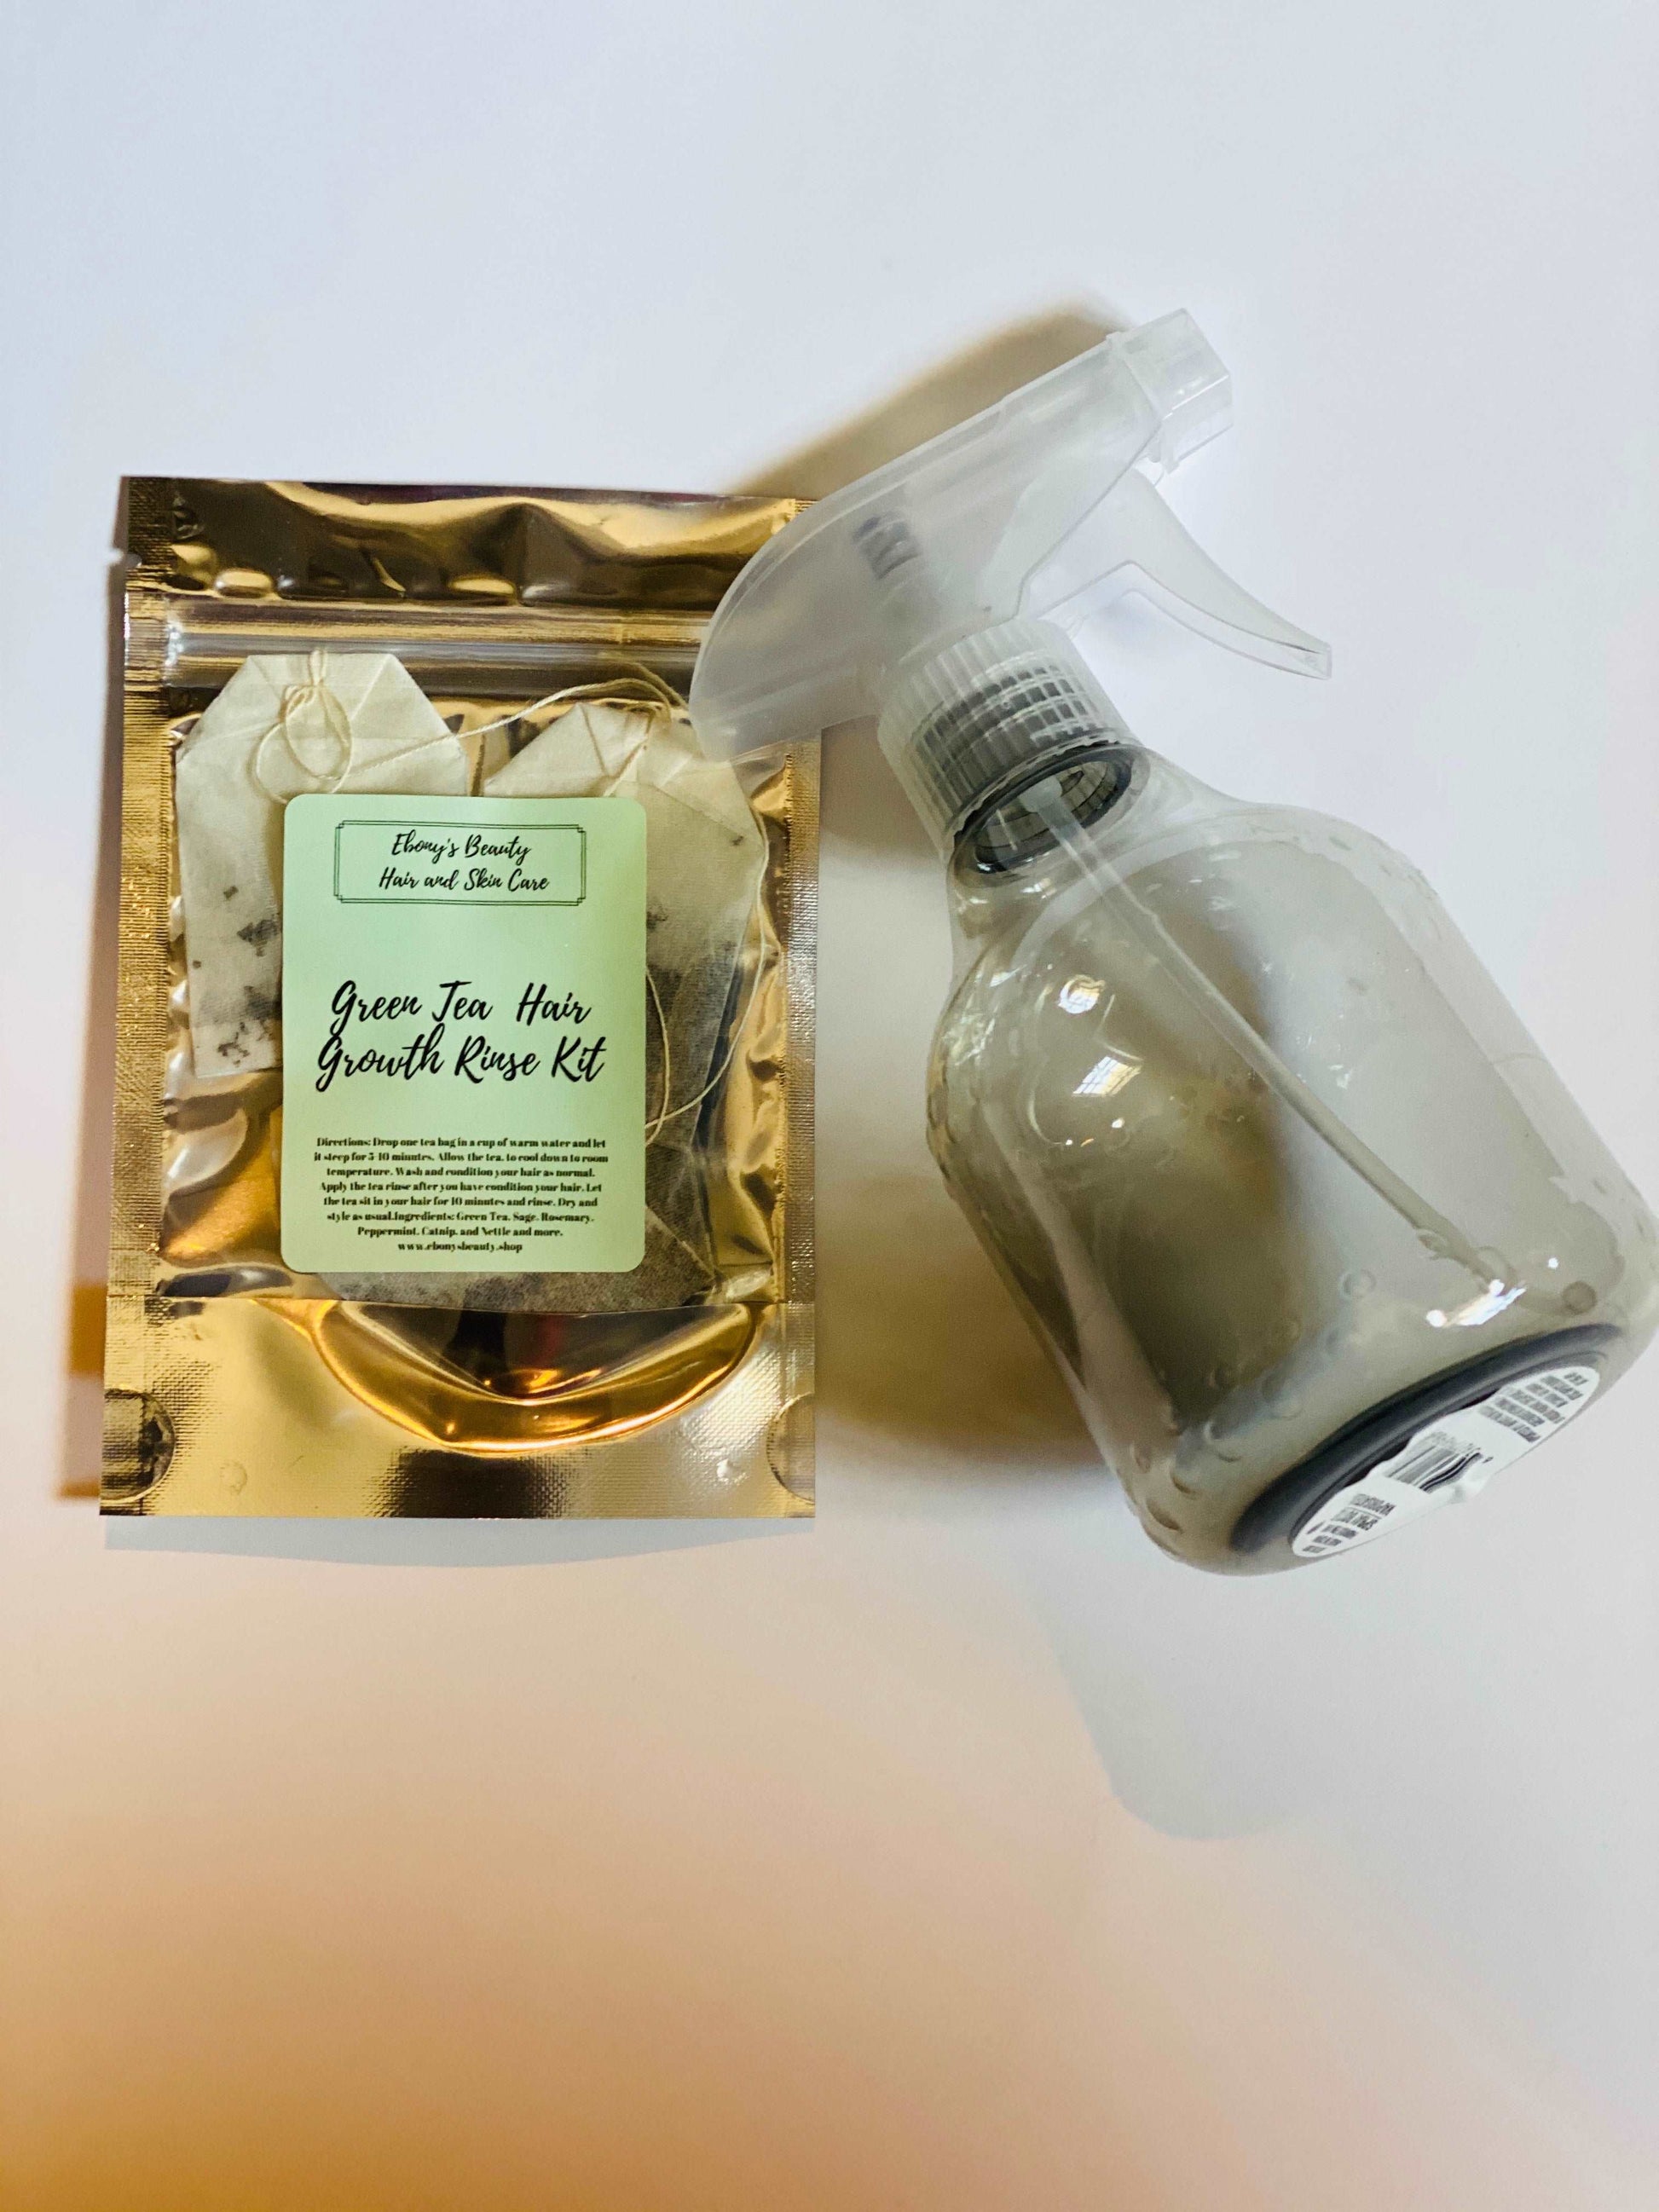 Green Tea Hair Growth Rinse Kit - Ebony's Beauty Hair and Skin Care LLC